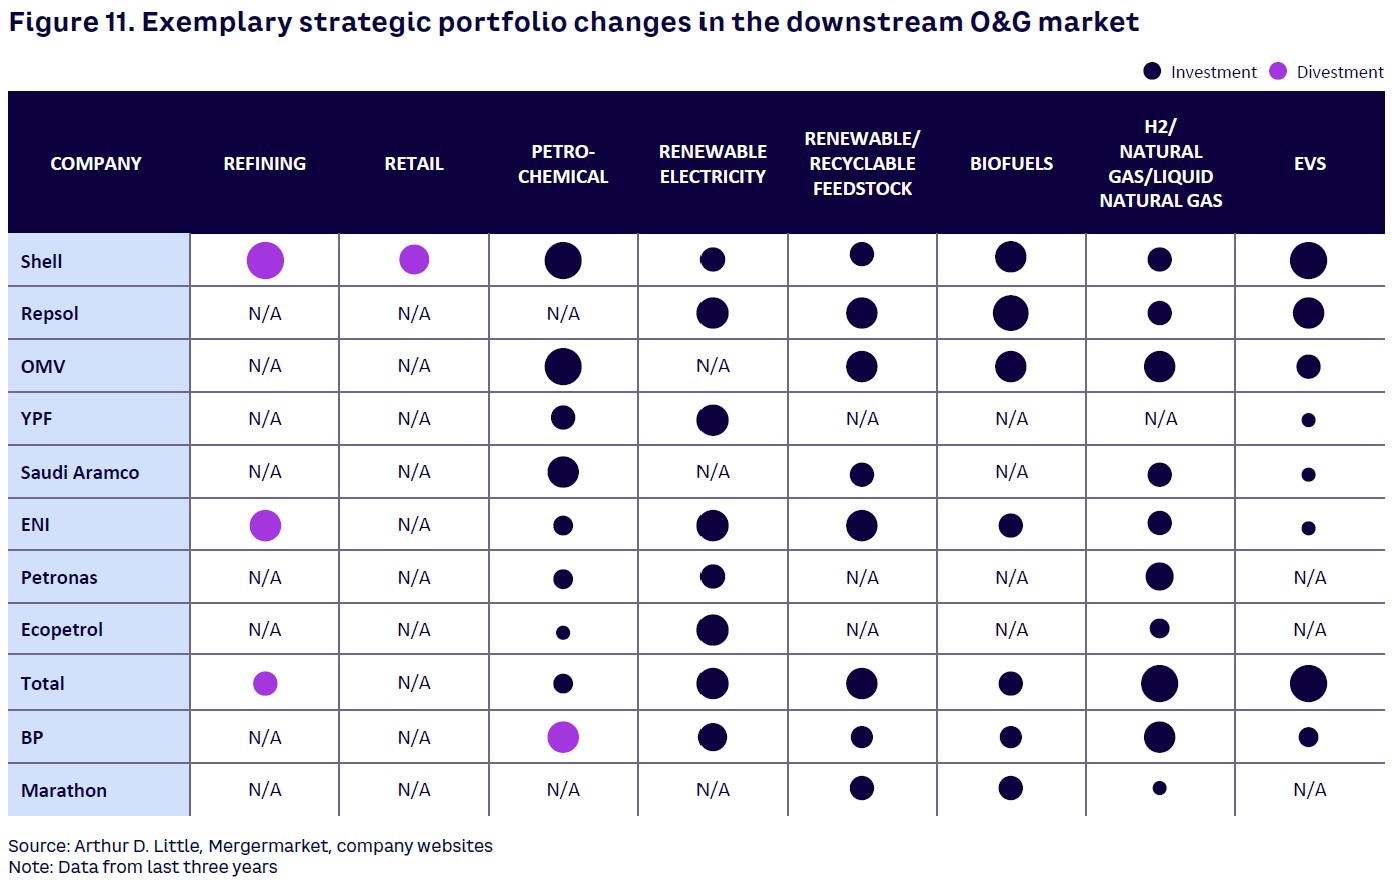 Figure 11. Exemplary strategic portfolio changes in the downstream O&G market